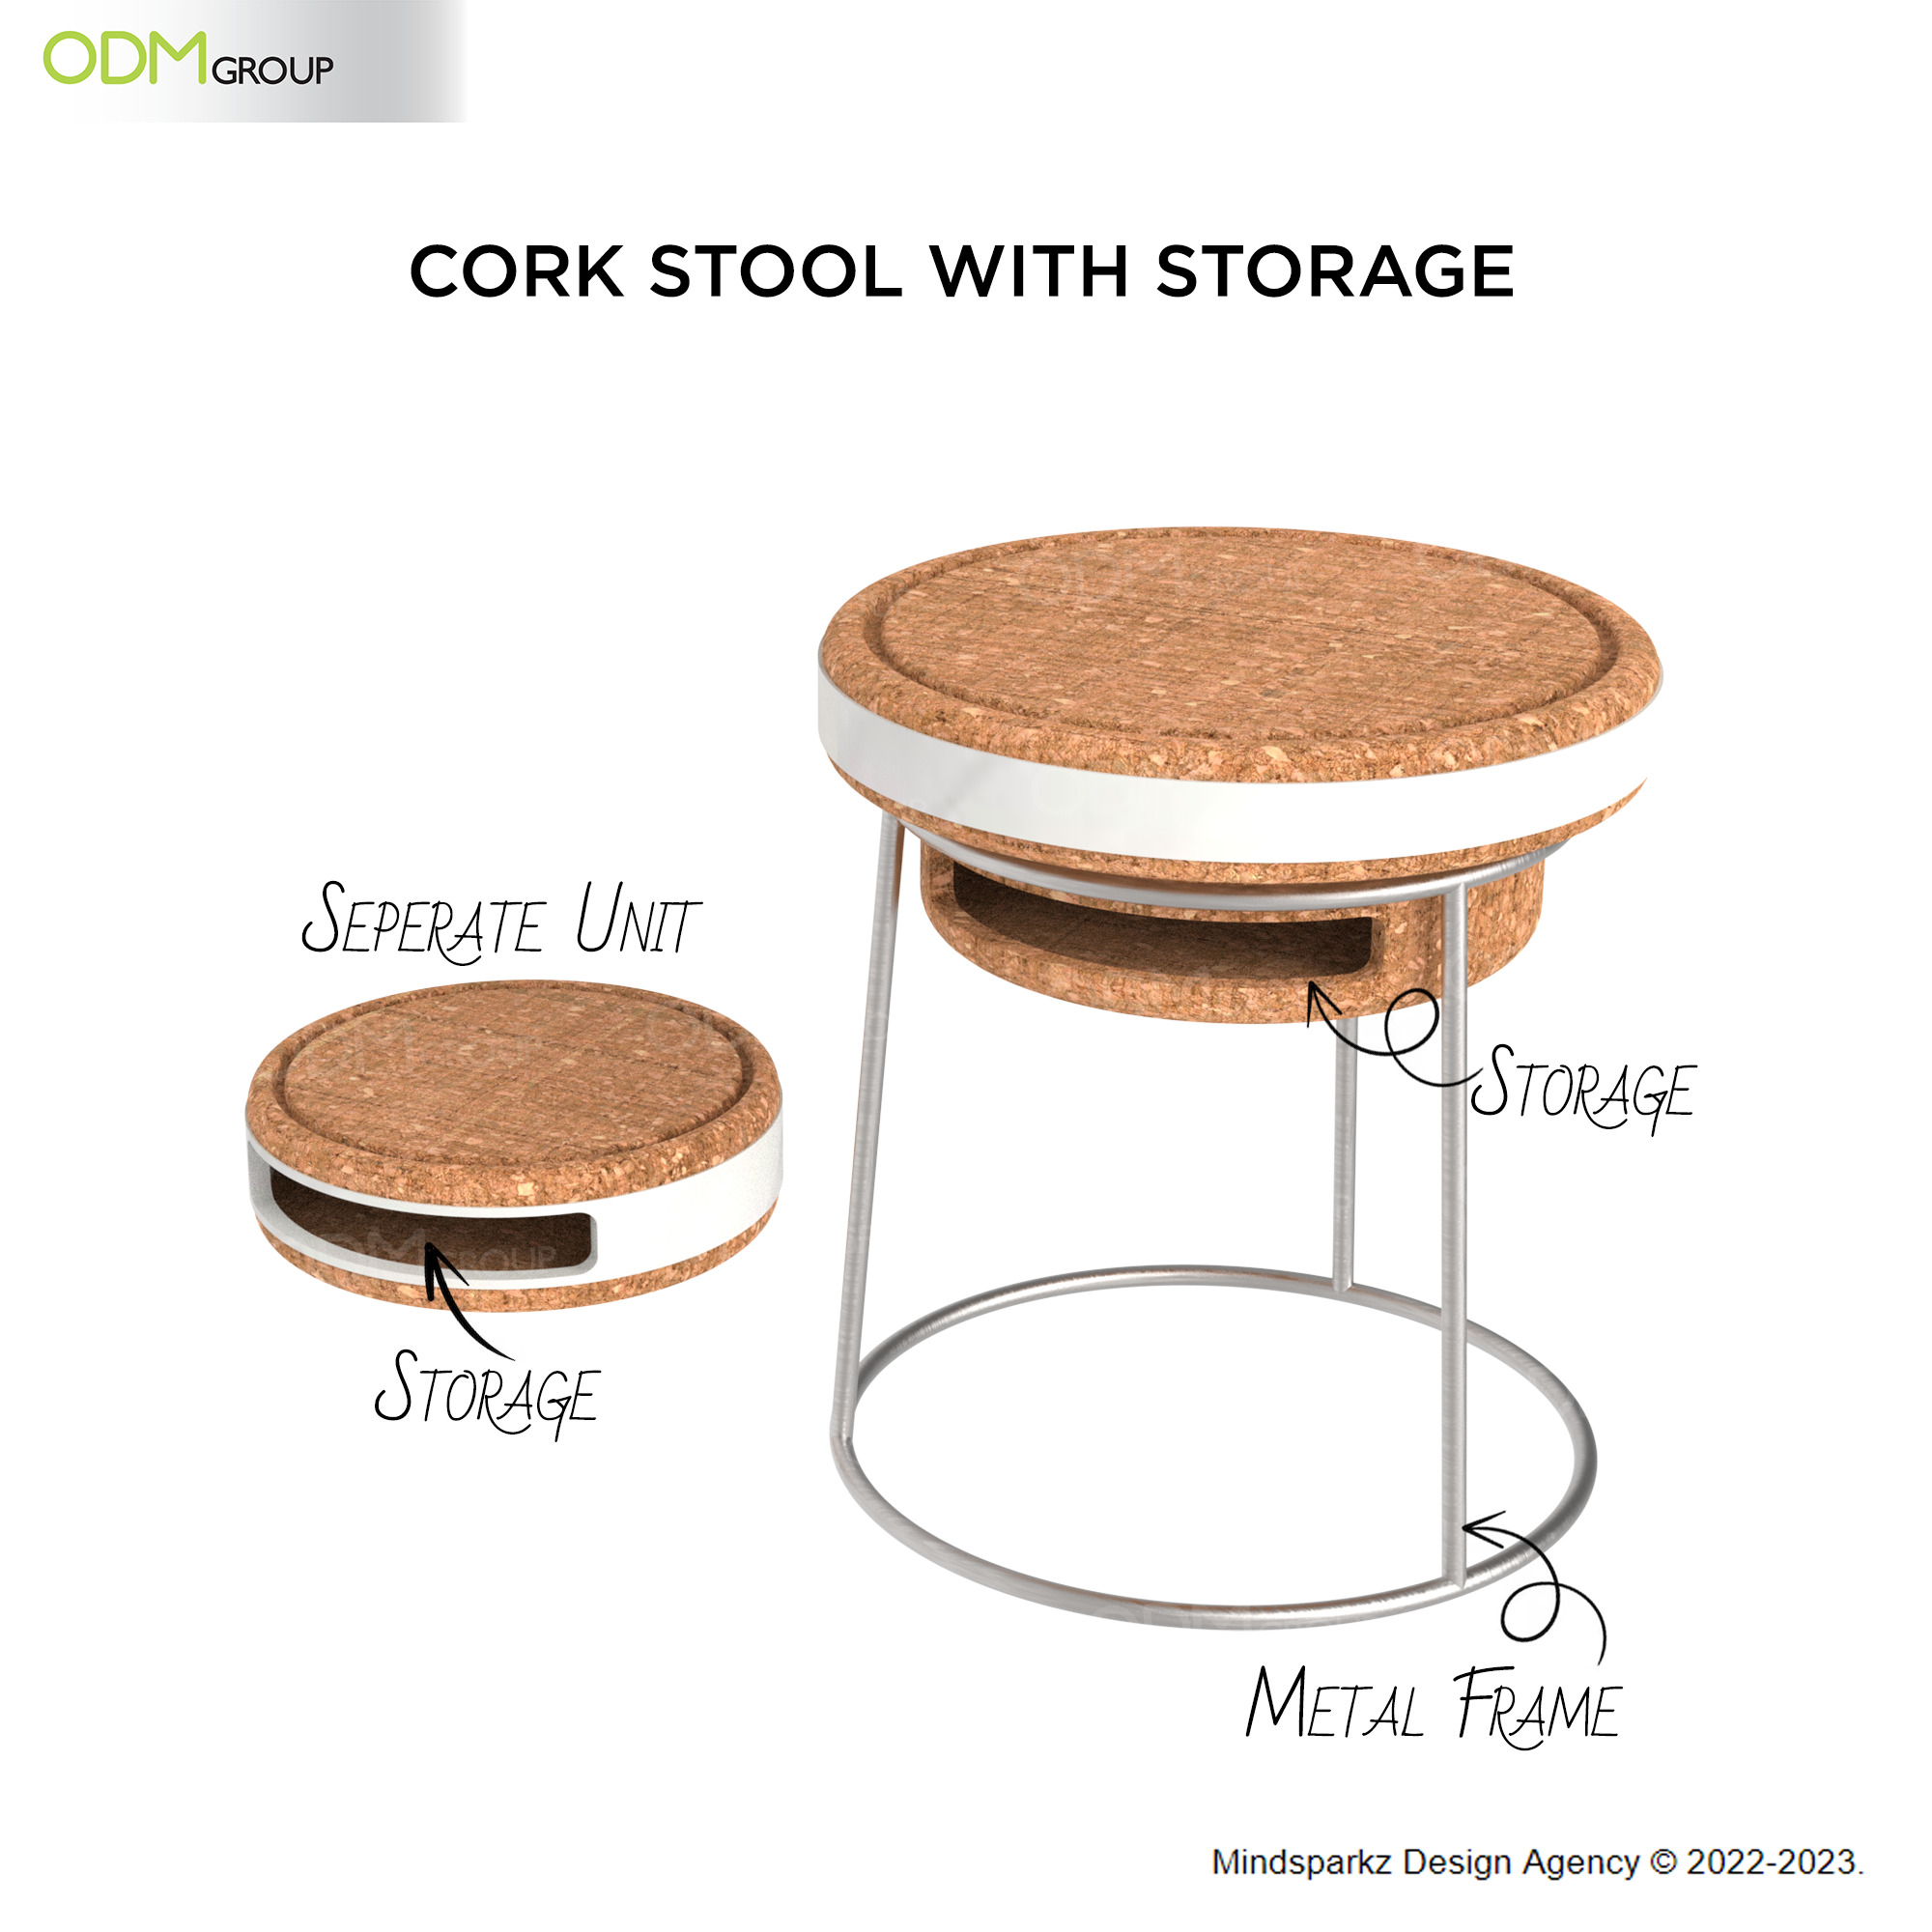 Cork stool with storage (metal frame)